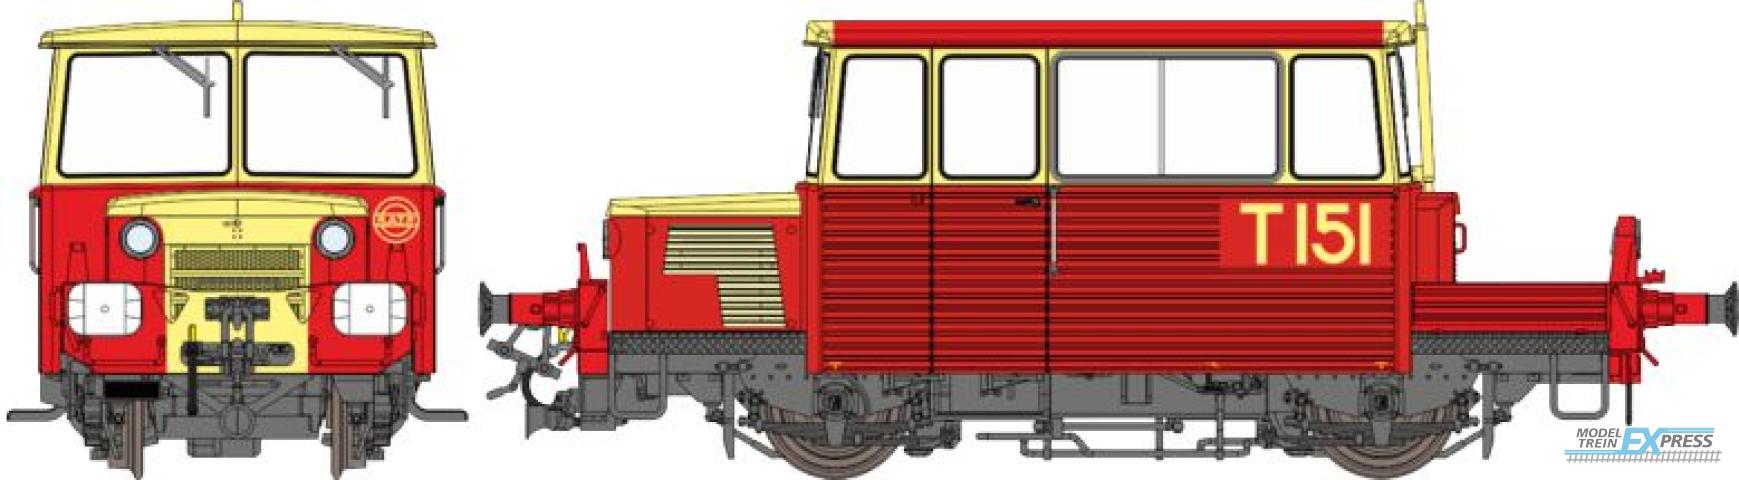 REE models MB-111S DU65  T 151 of RATP, red roof, Era III-IV - DCC Sound